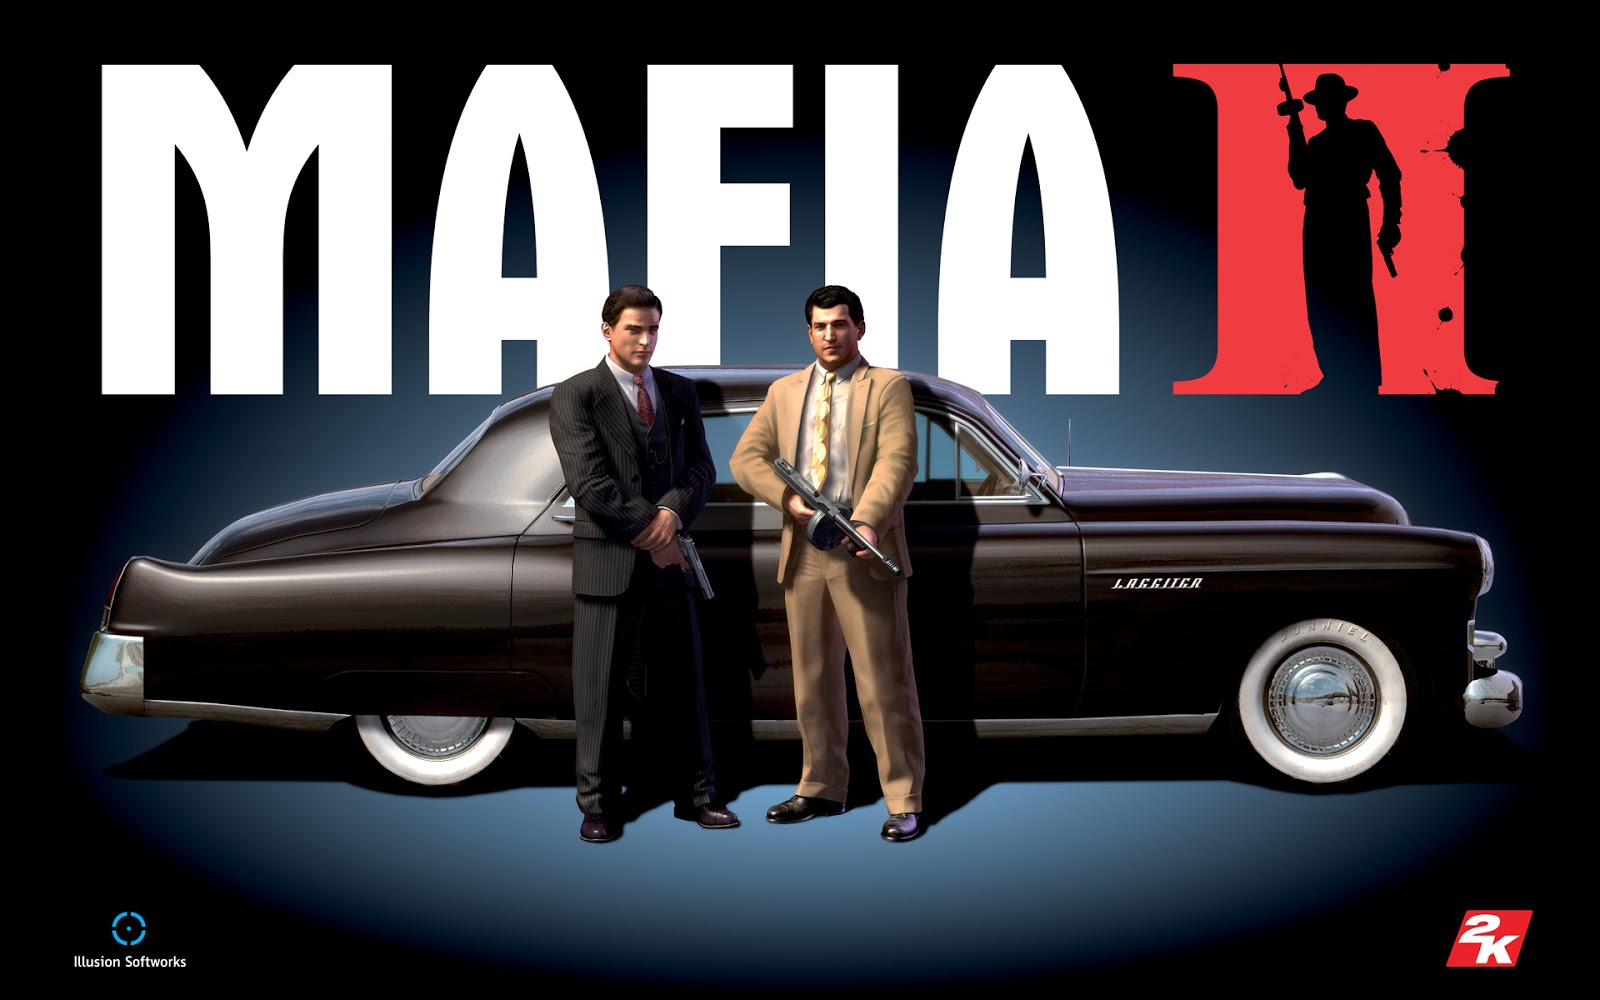 Mafia 2 PC Game Free Download Full Version ISO Compressed